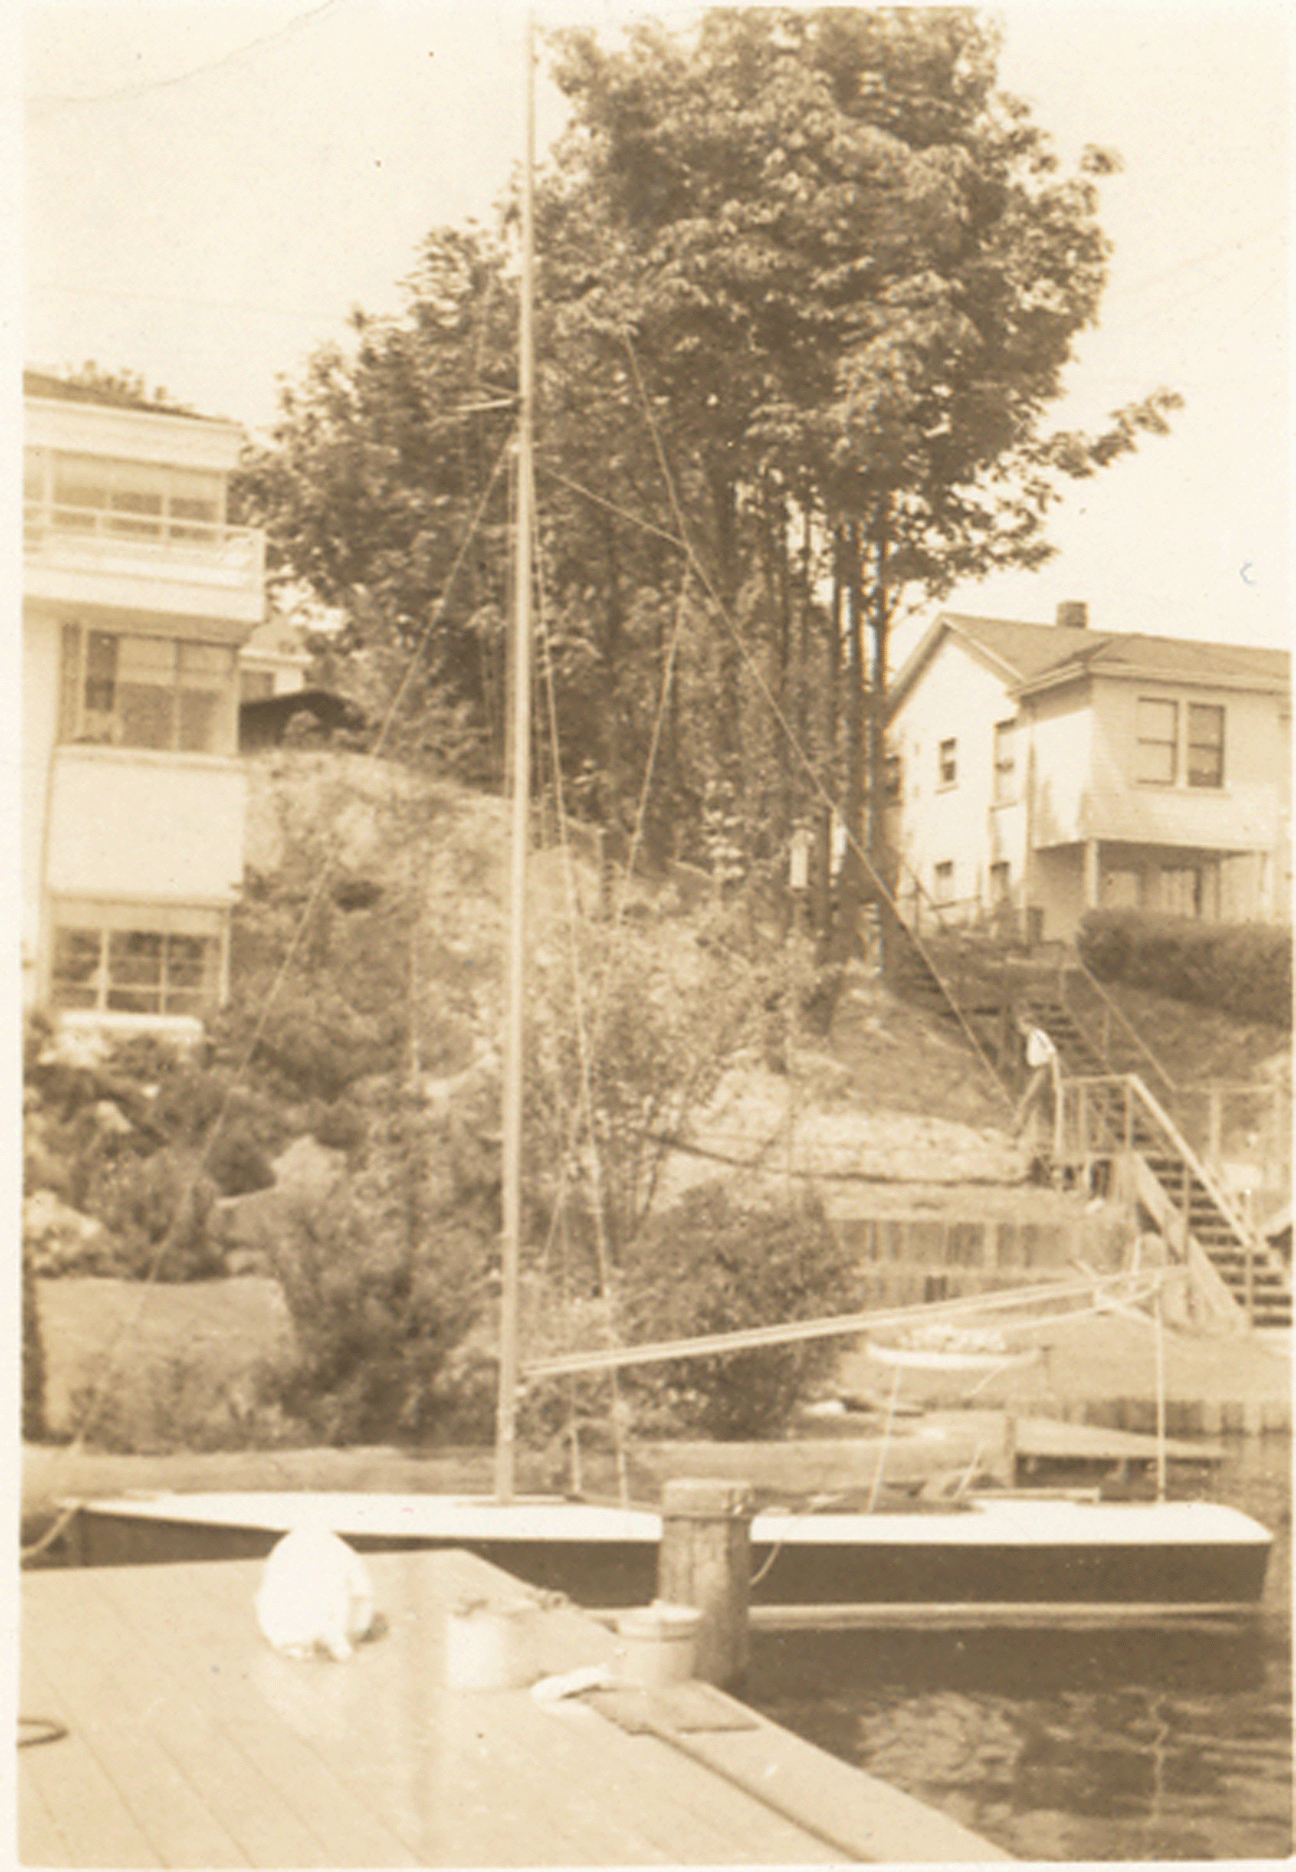 Evert's berth on Portage Bay, 1930s